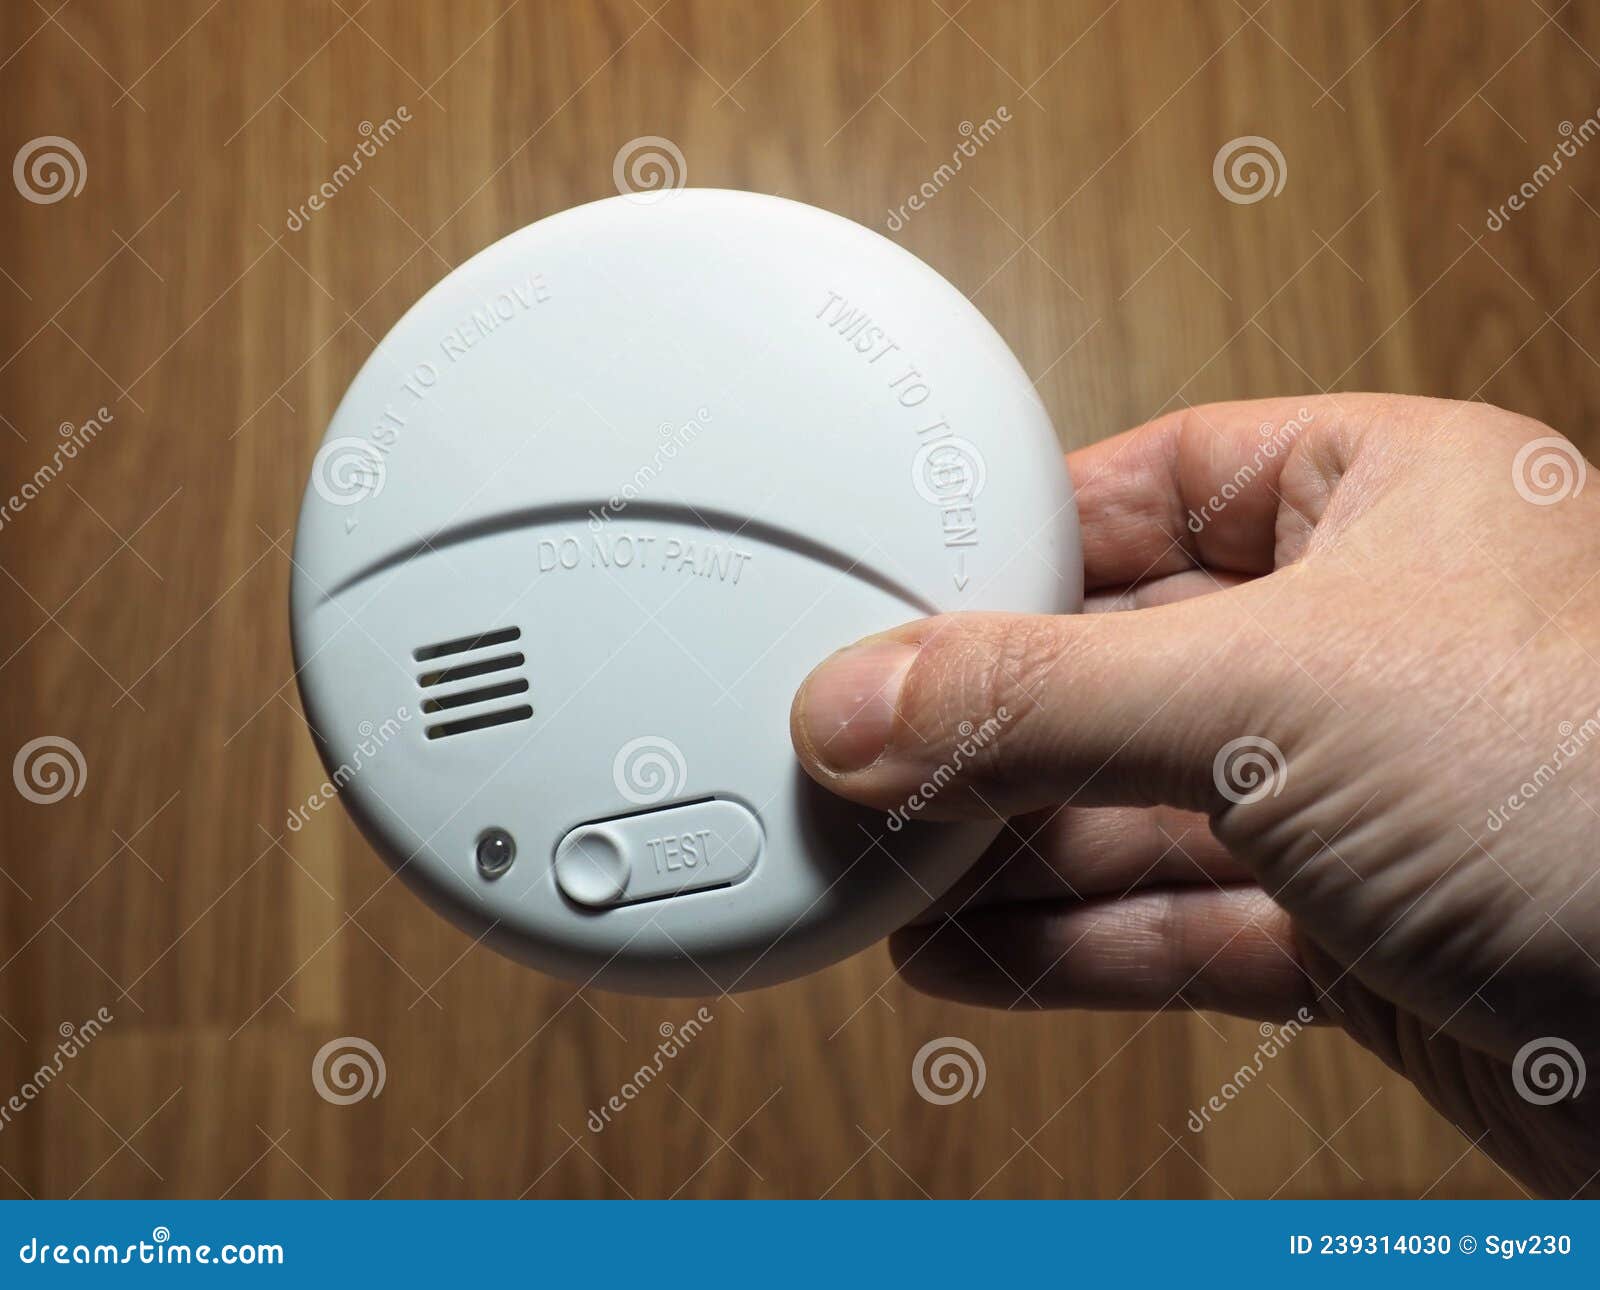 photoelectric smoke detector. hand with smoke detector